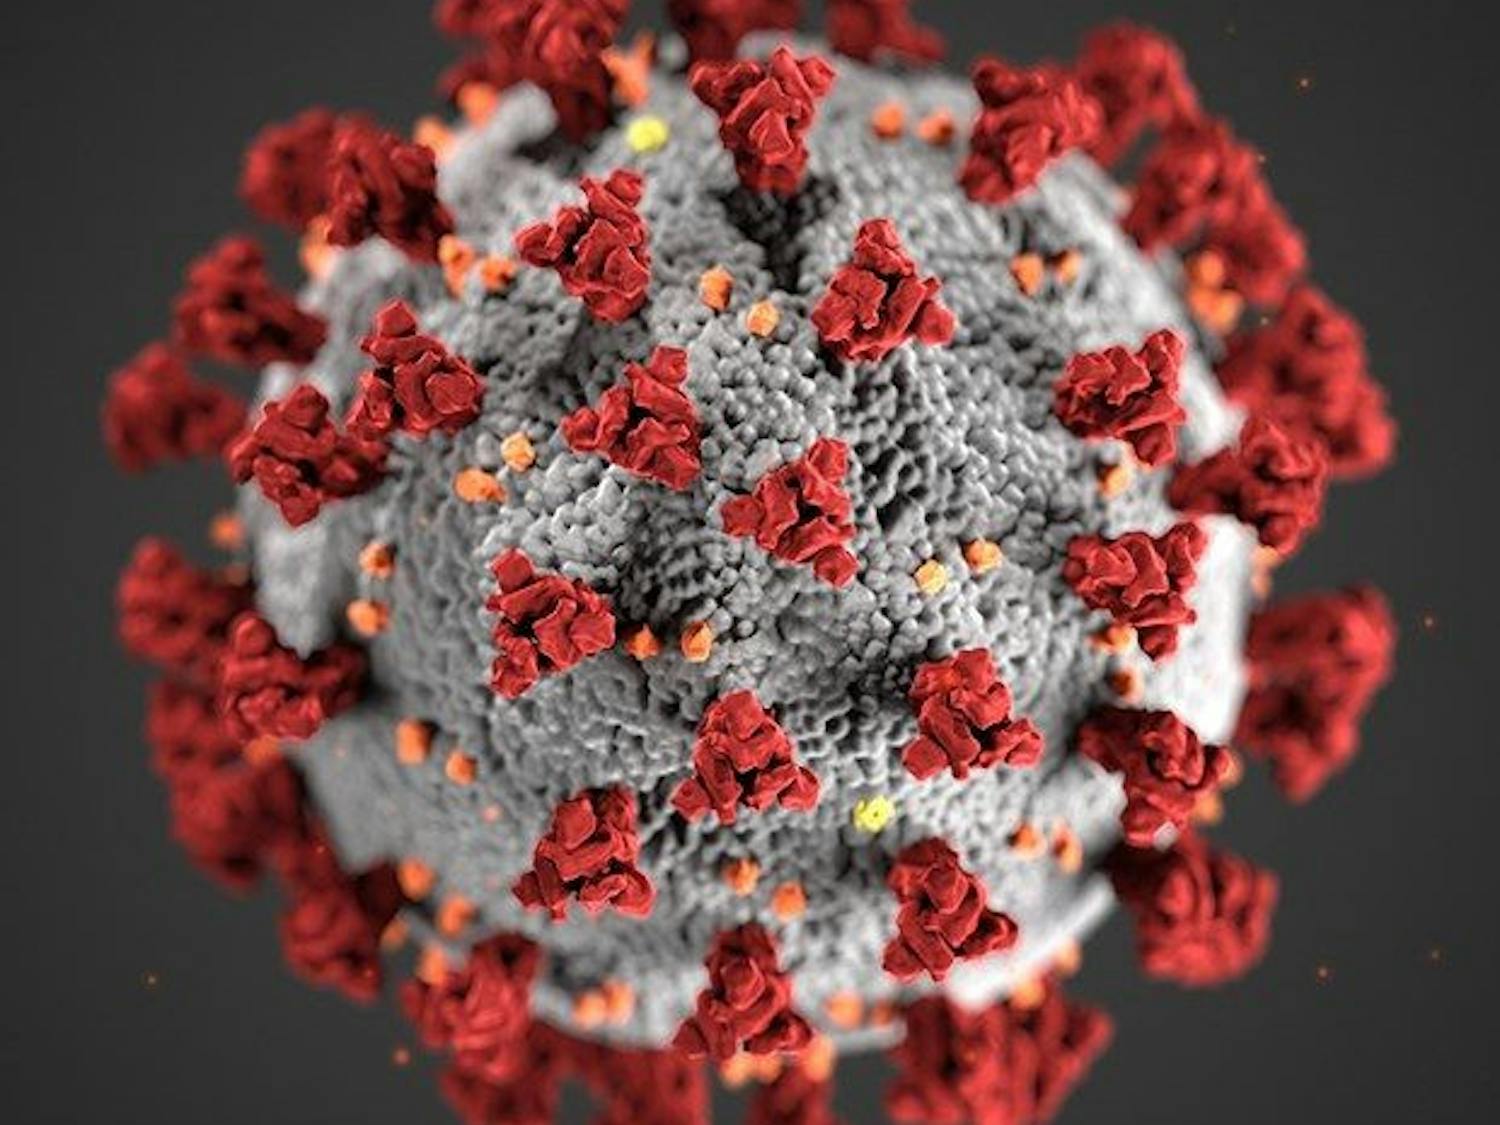 CDC-coronavirus-image-23311-for-web-e1586065589744